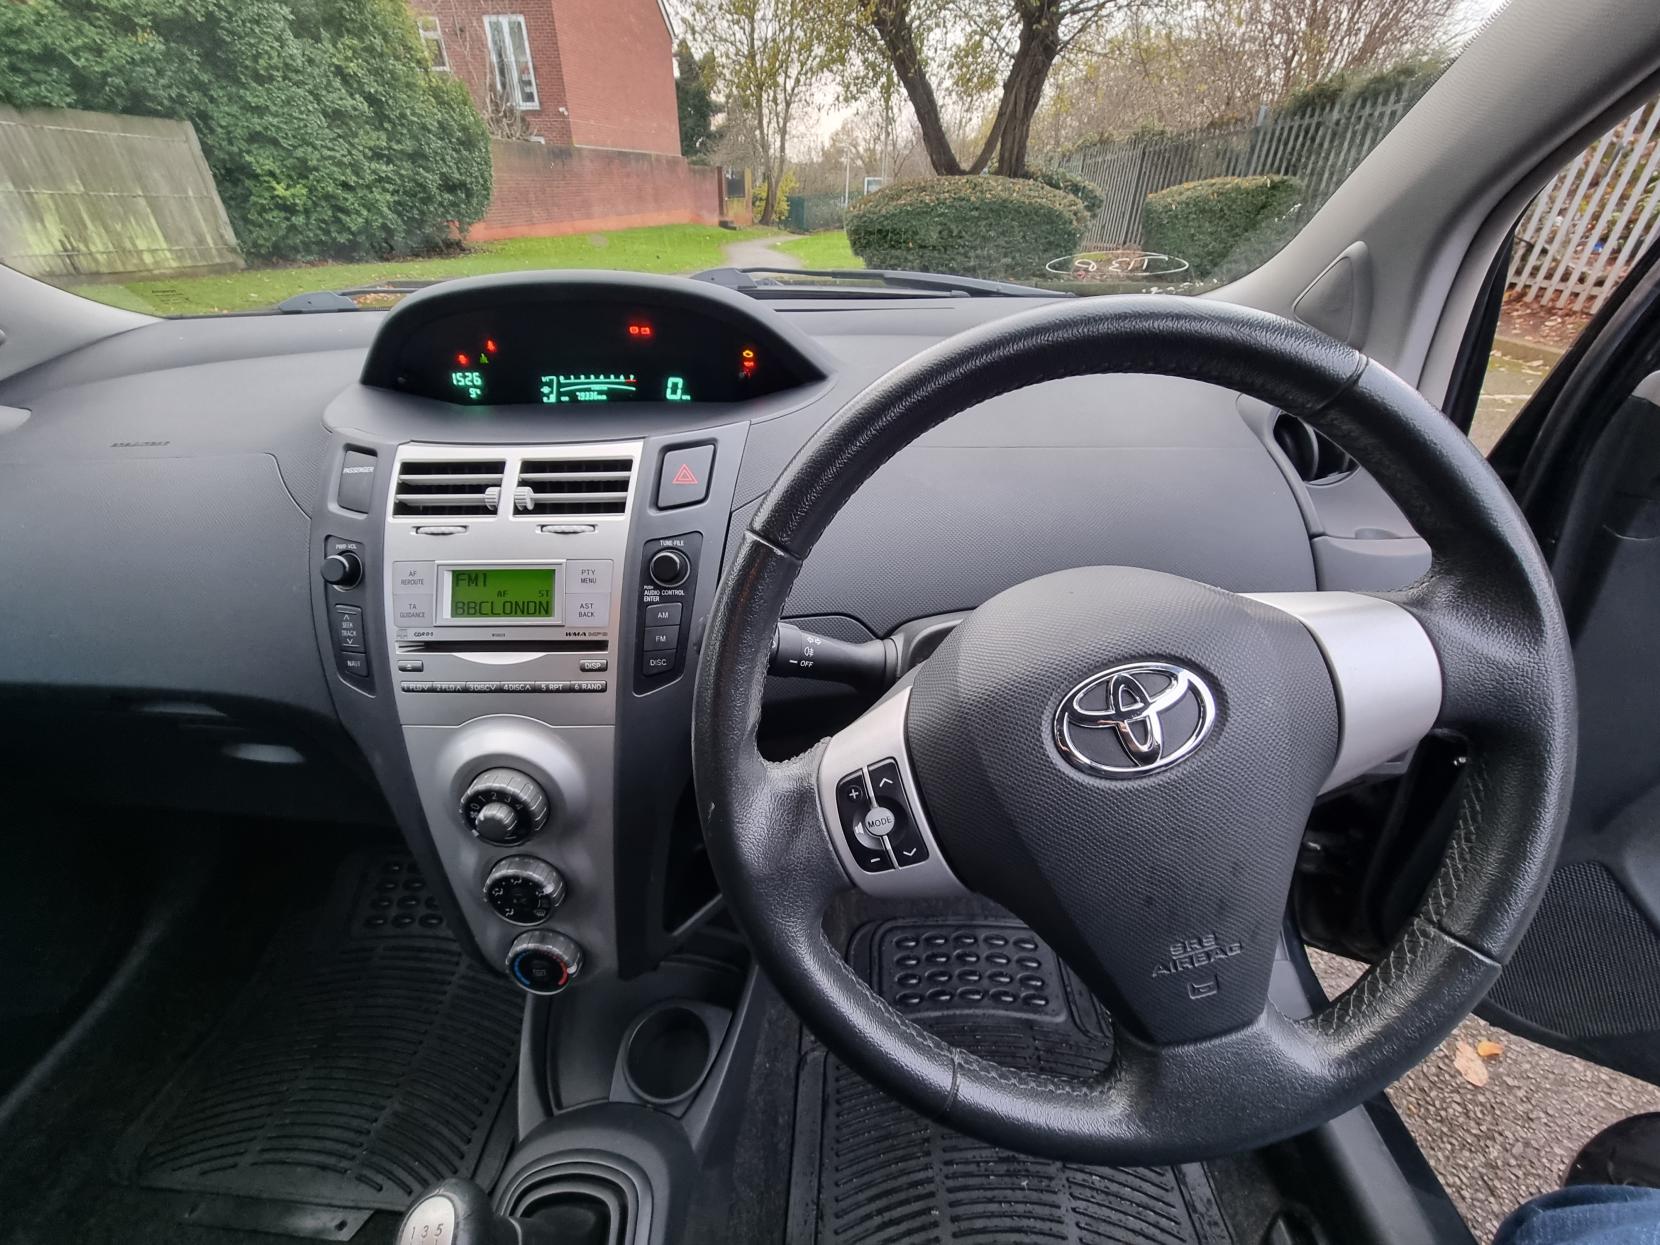 Toyota Yaris 1.3 VVT-i TR Hatchback 5dr Petrol Manual (141 g/km, 85 bhp)